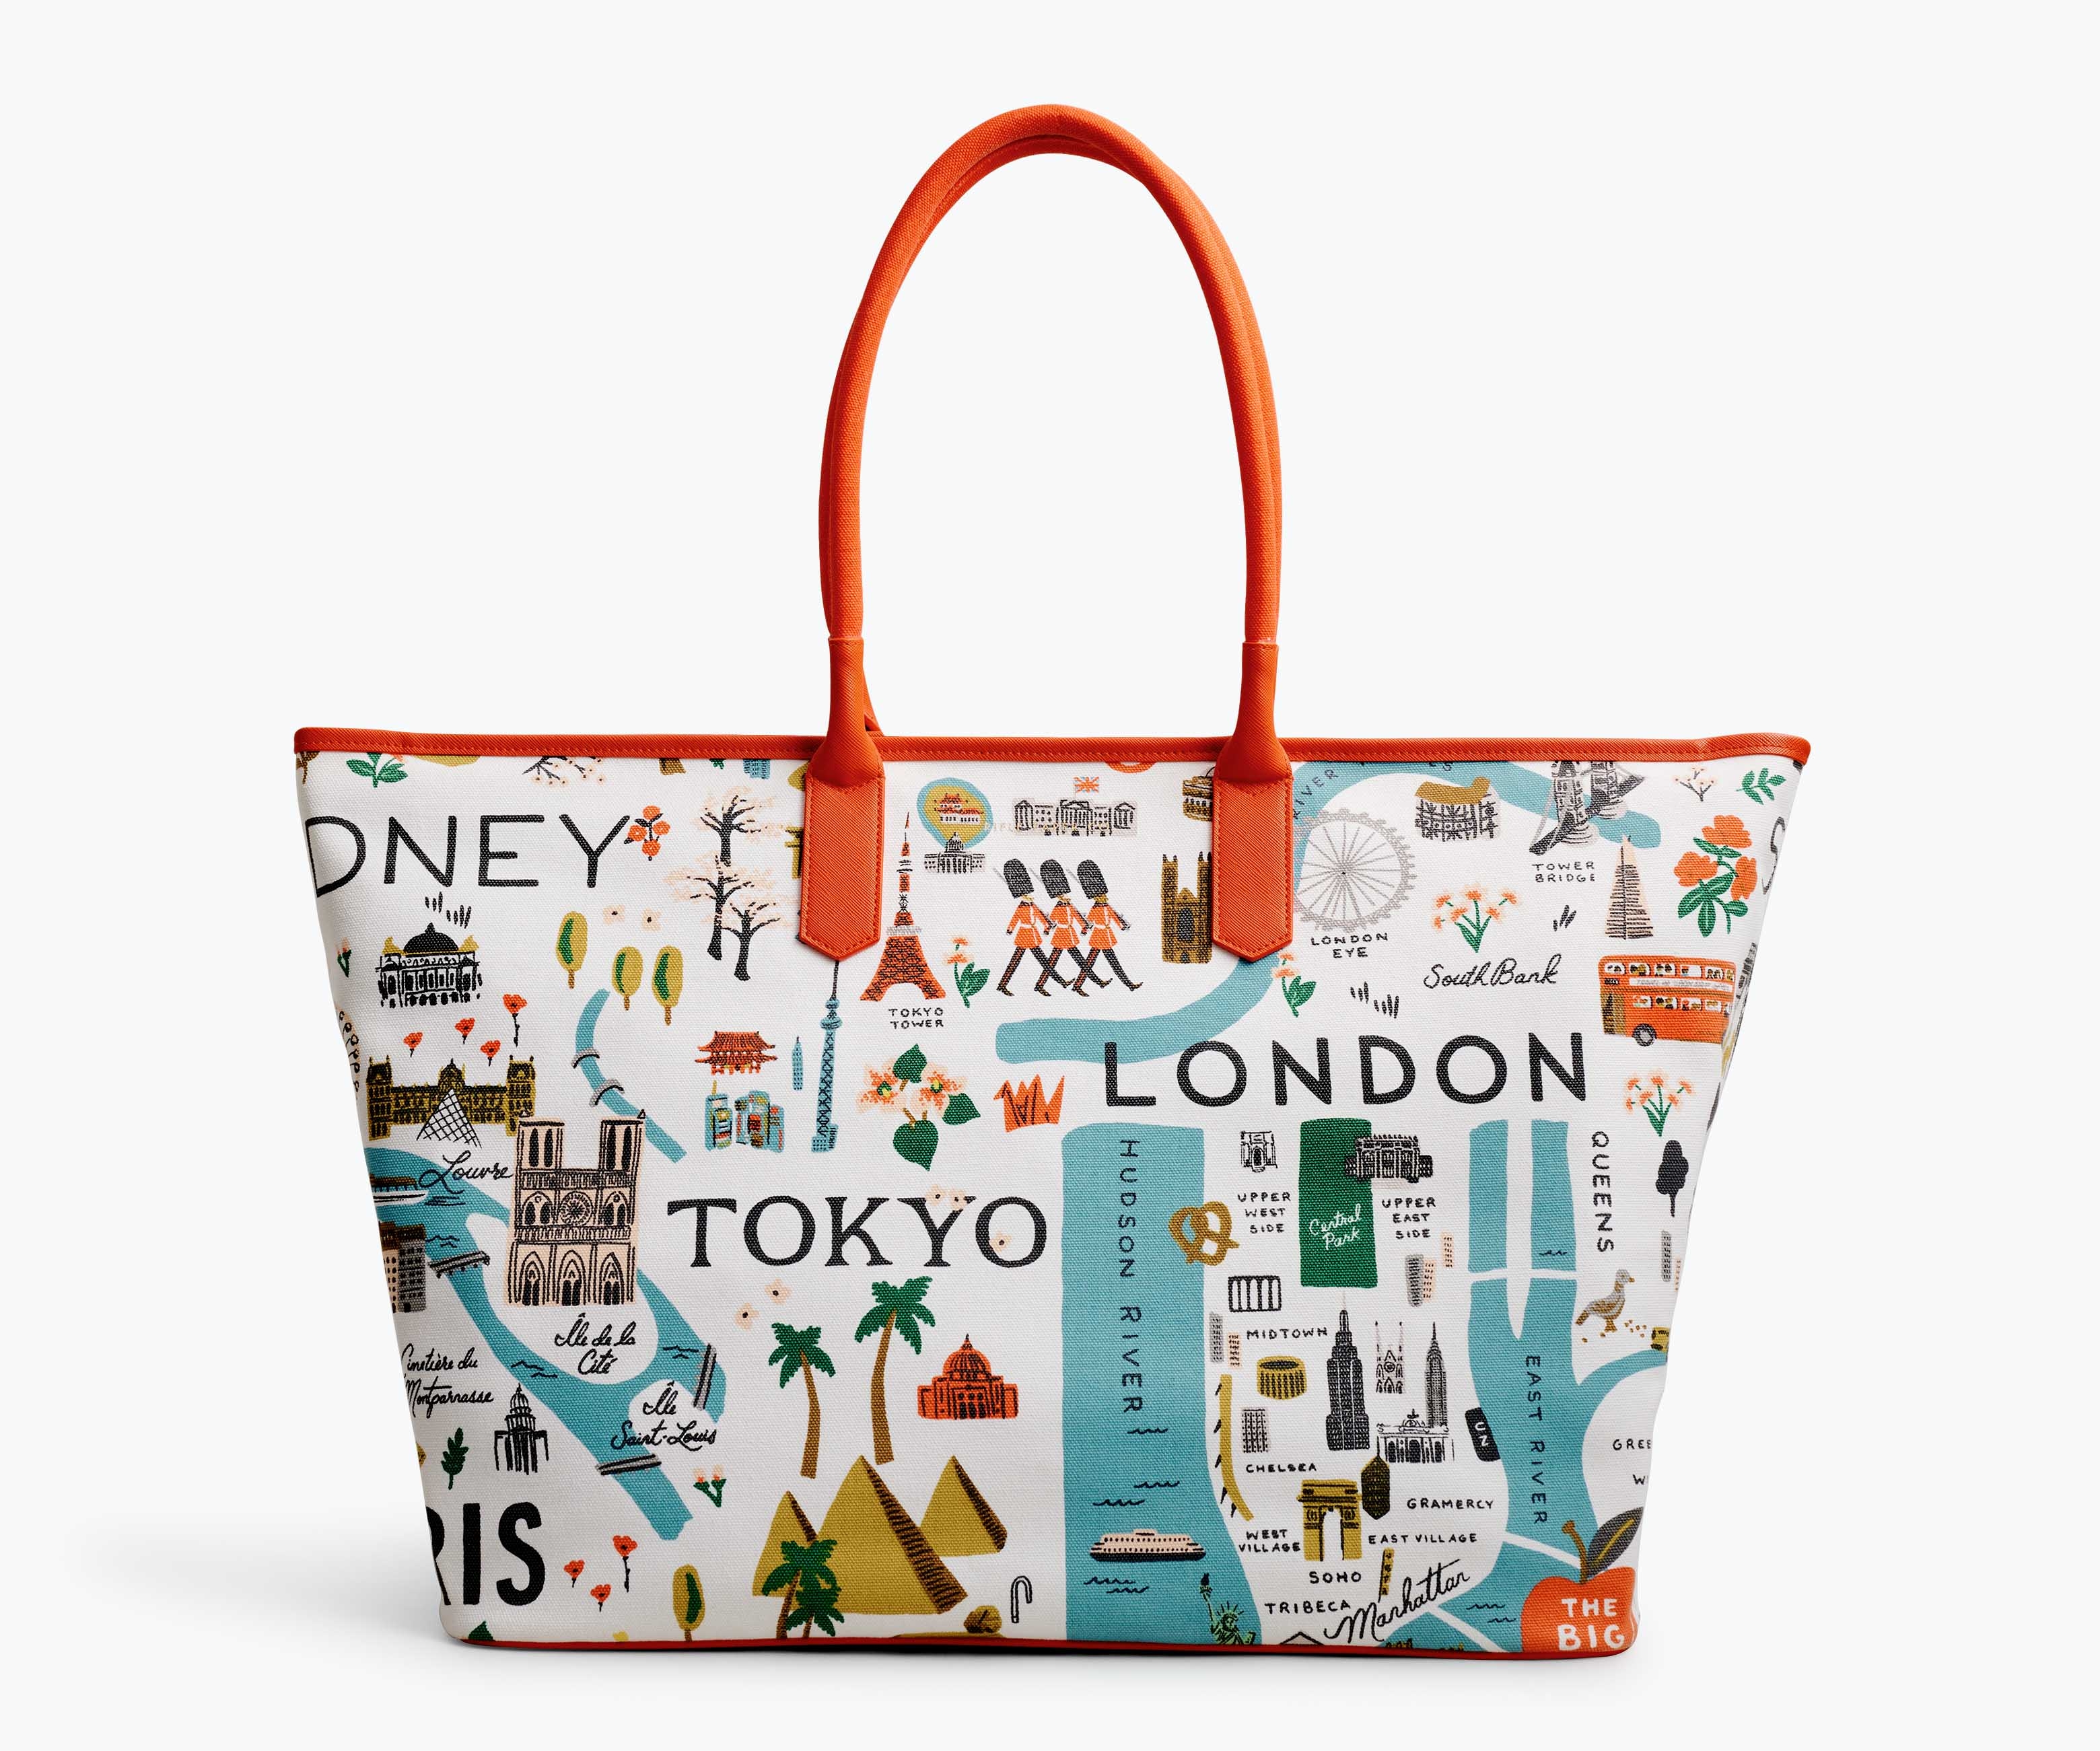 Bon Voyage Canvas Tote Bag Matching Travel Tote Bag Travel 